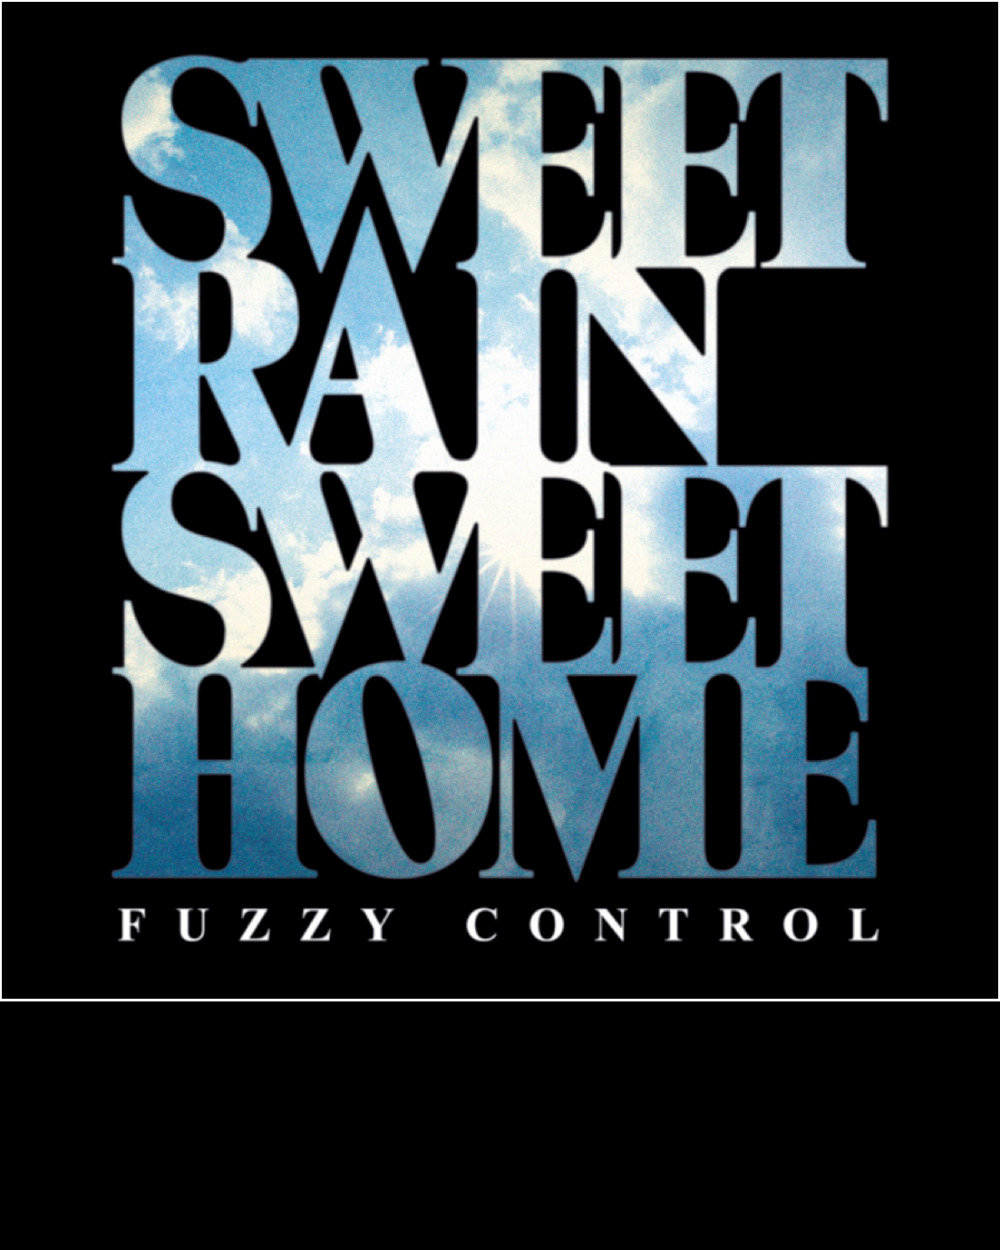 FUZZY CONTROLSWEET RAIN　SWEET HOME